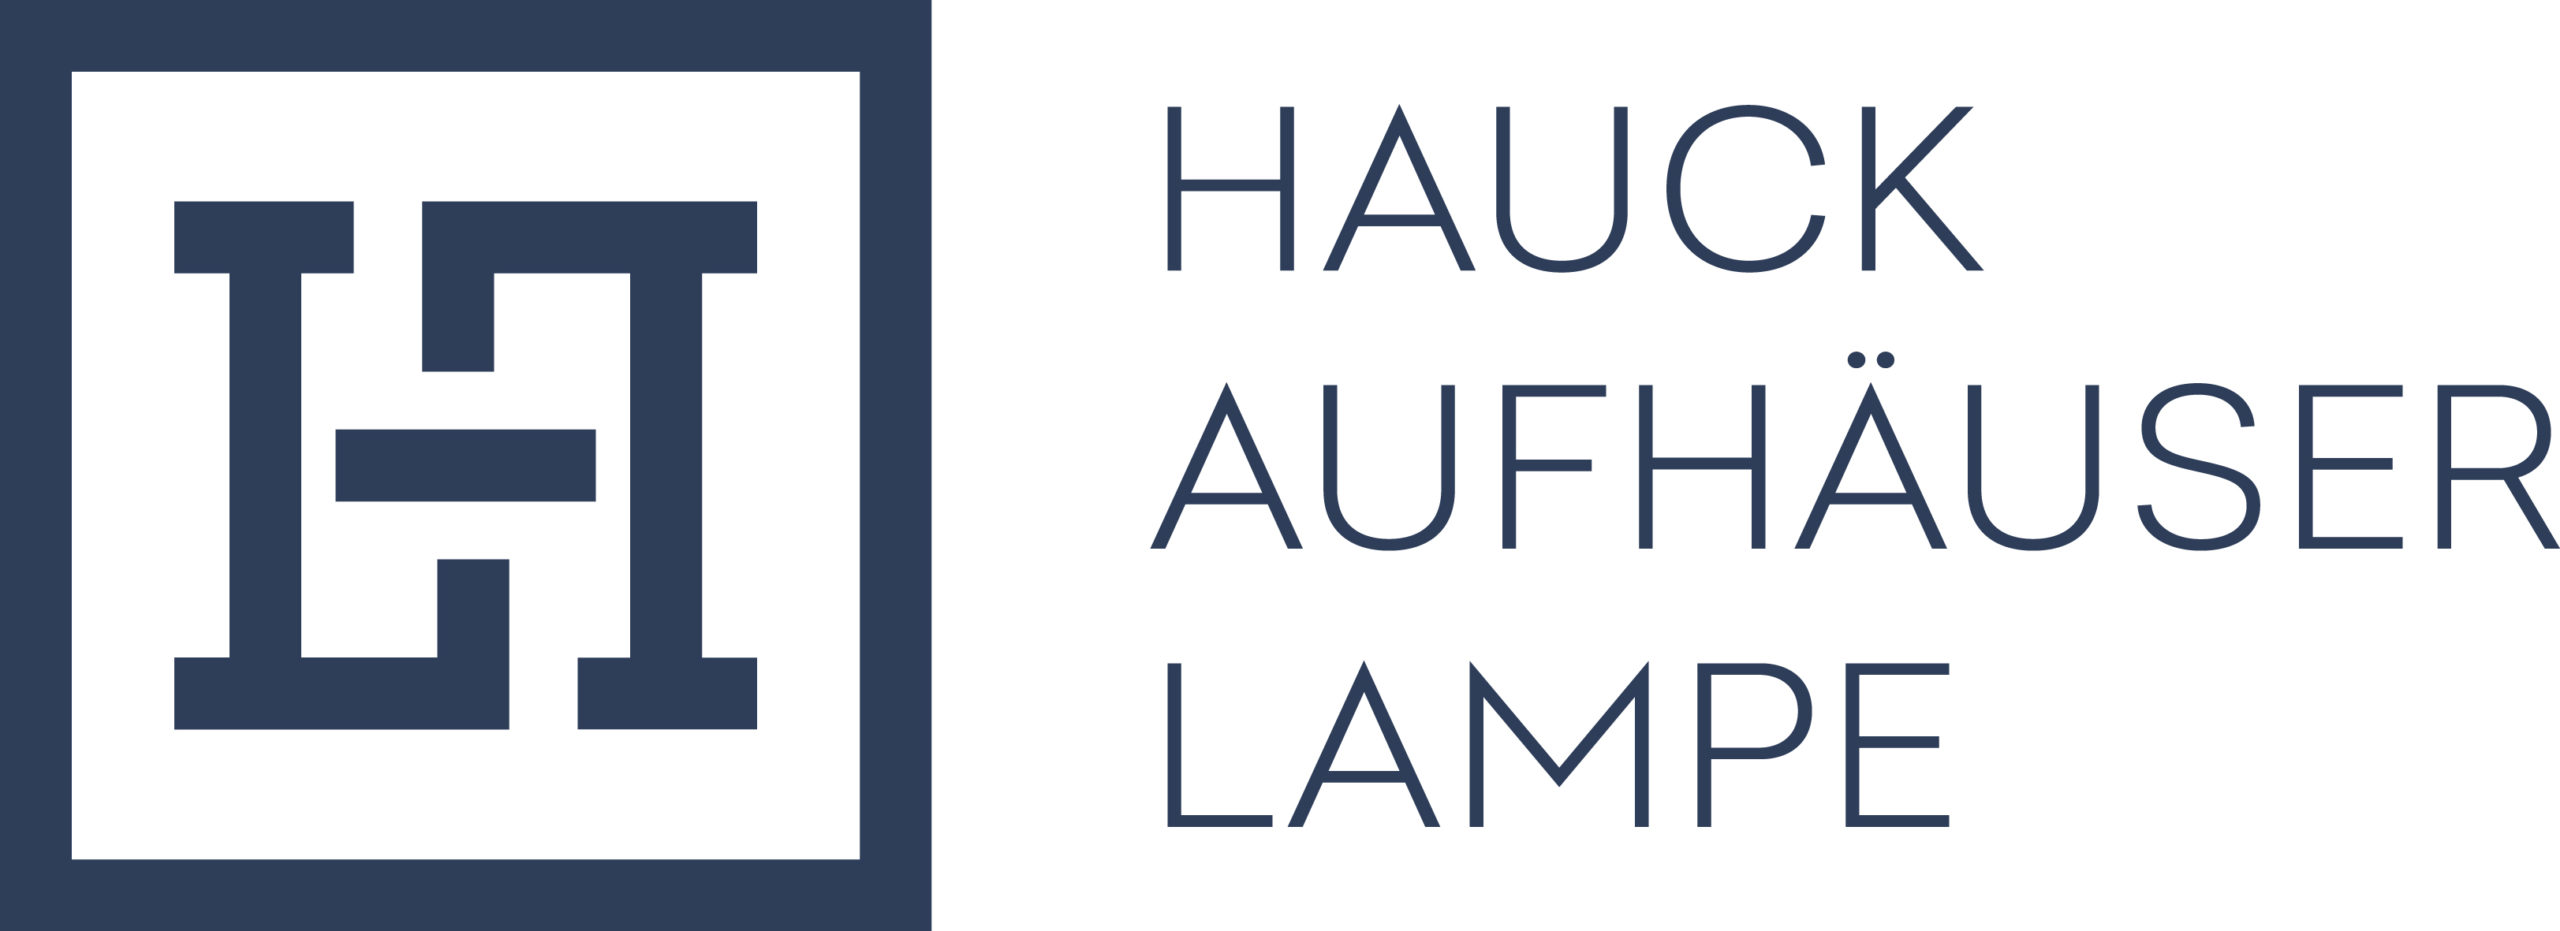 Hauck Aufhäuser Lampe Privatbank AG